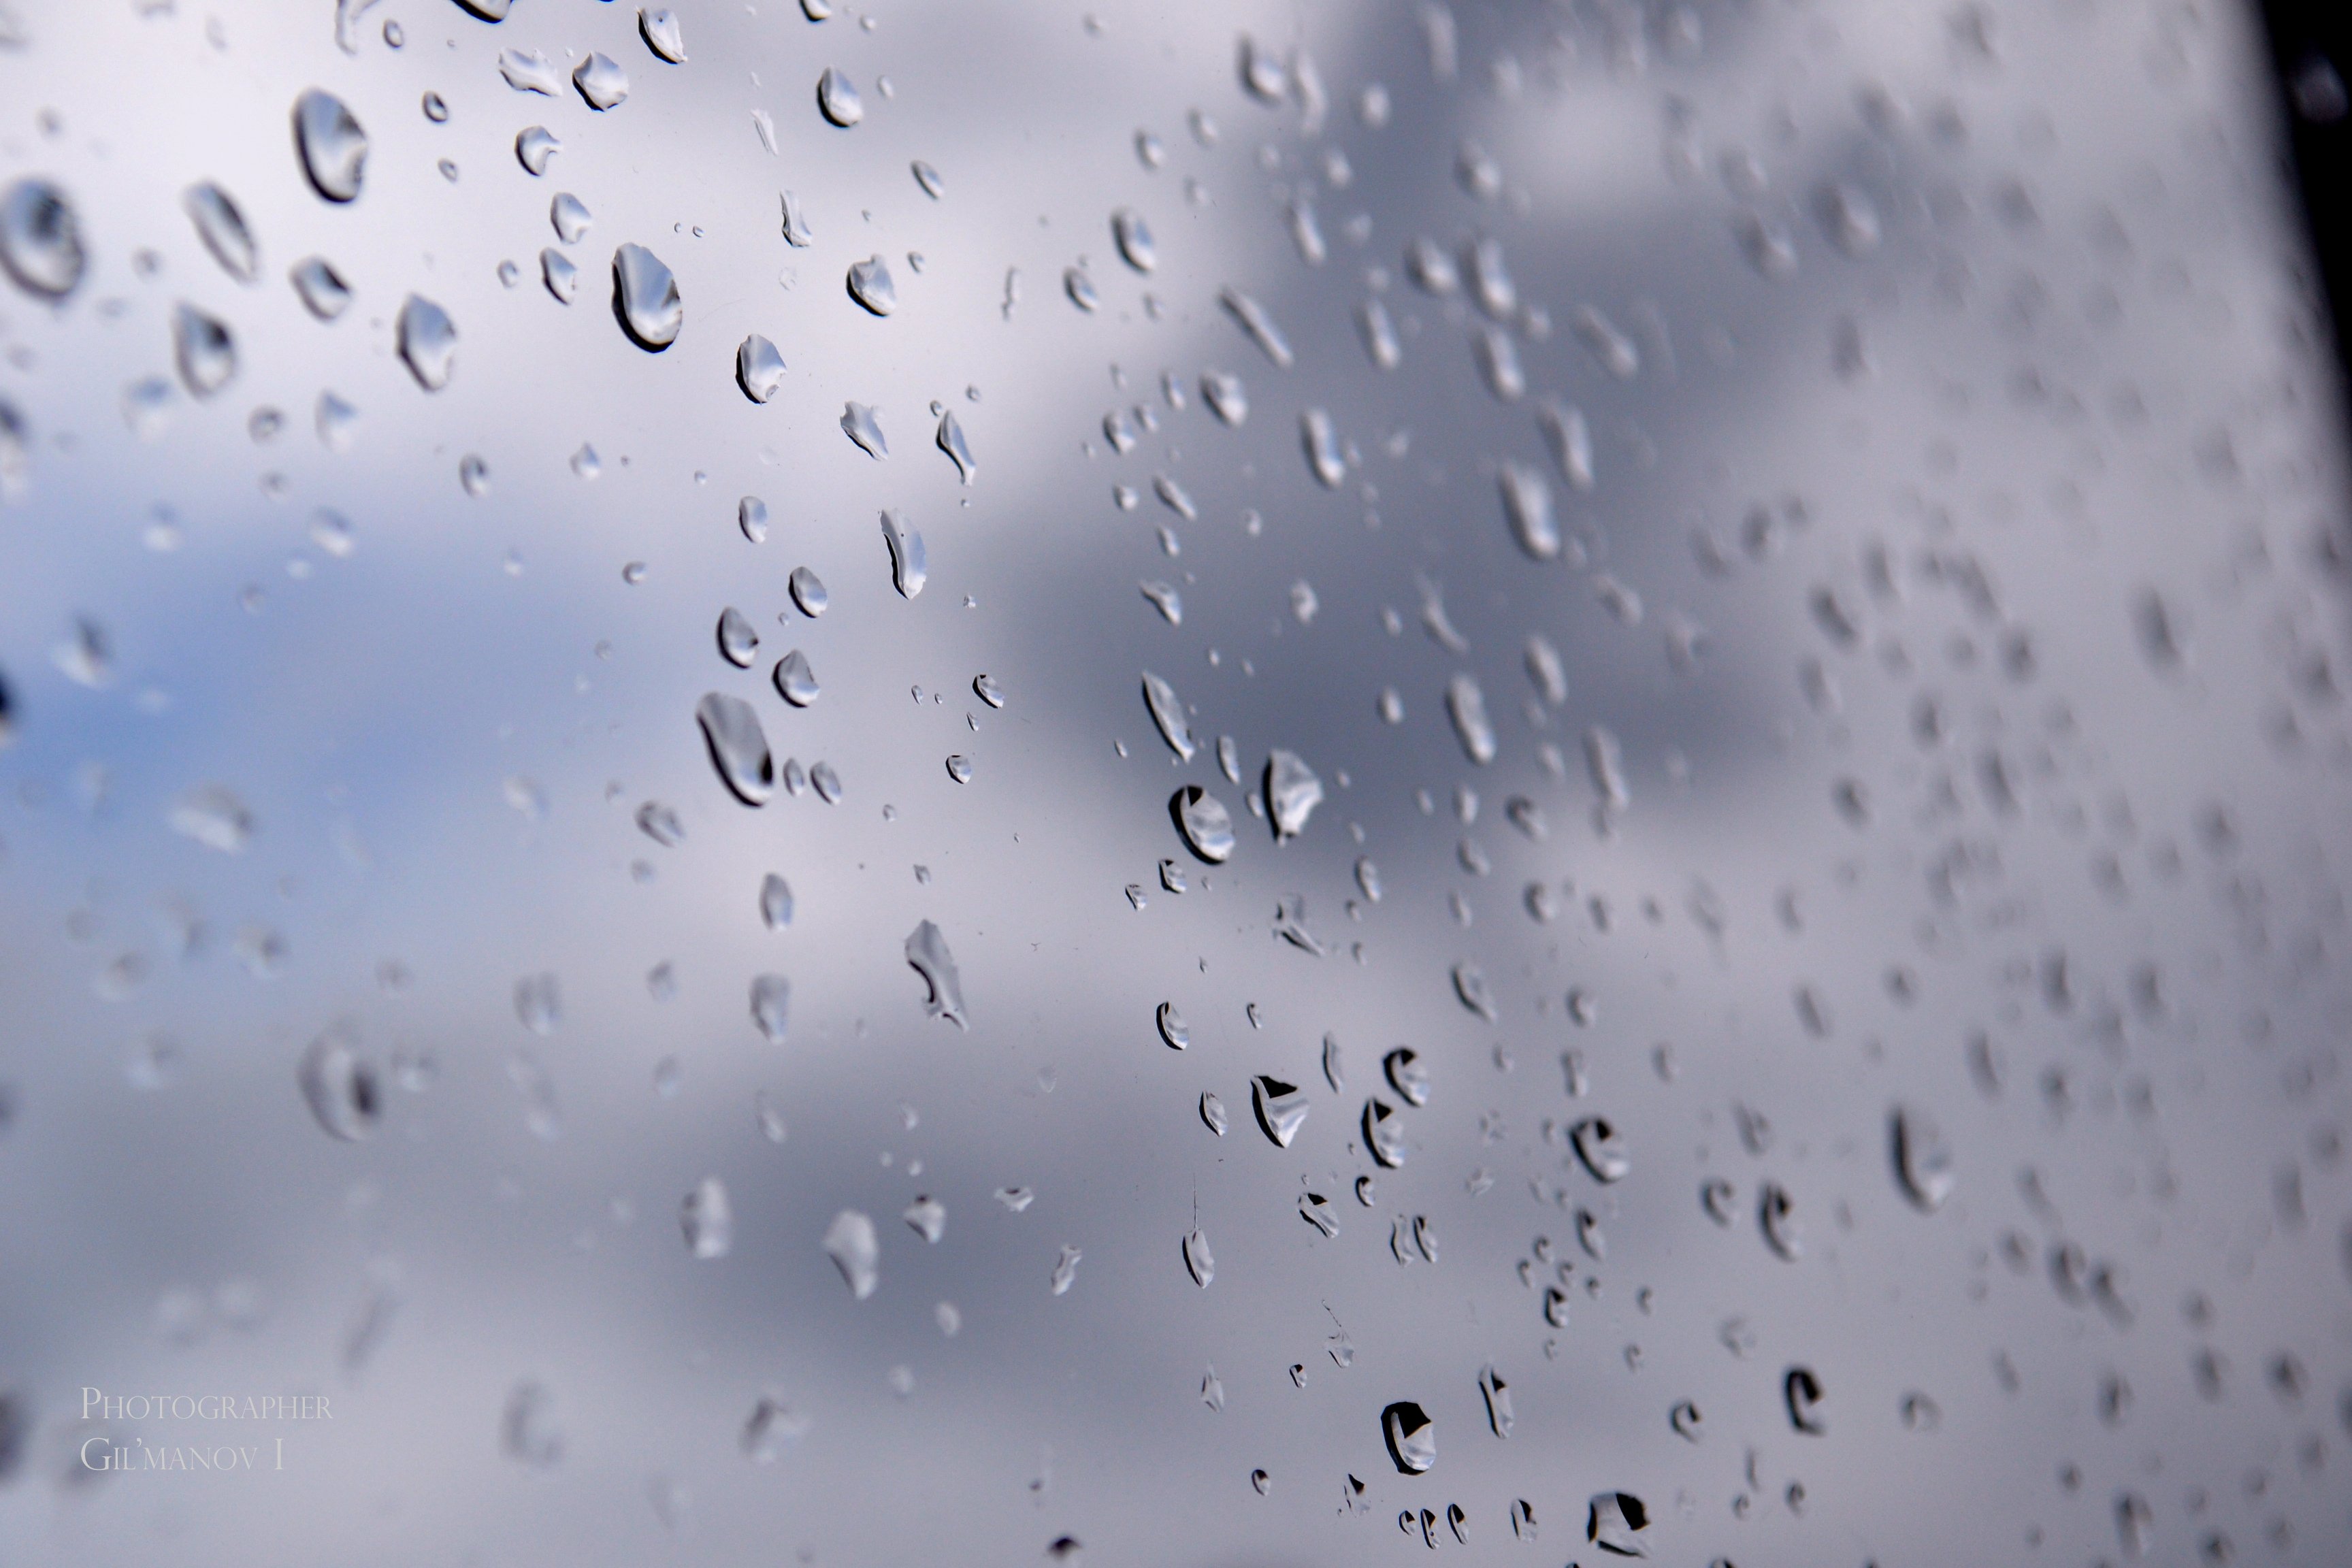 Картинка капли дождя. Капли дождя. Капли на стекле. Капли дождя на стекле. Капли дождя на окне.